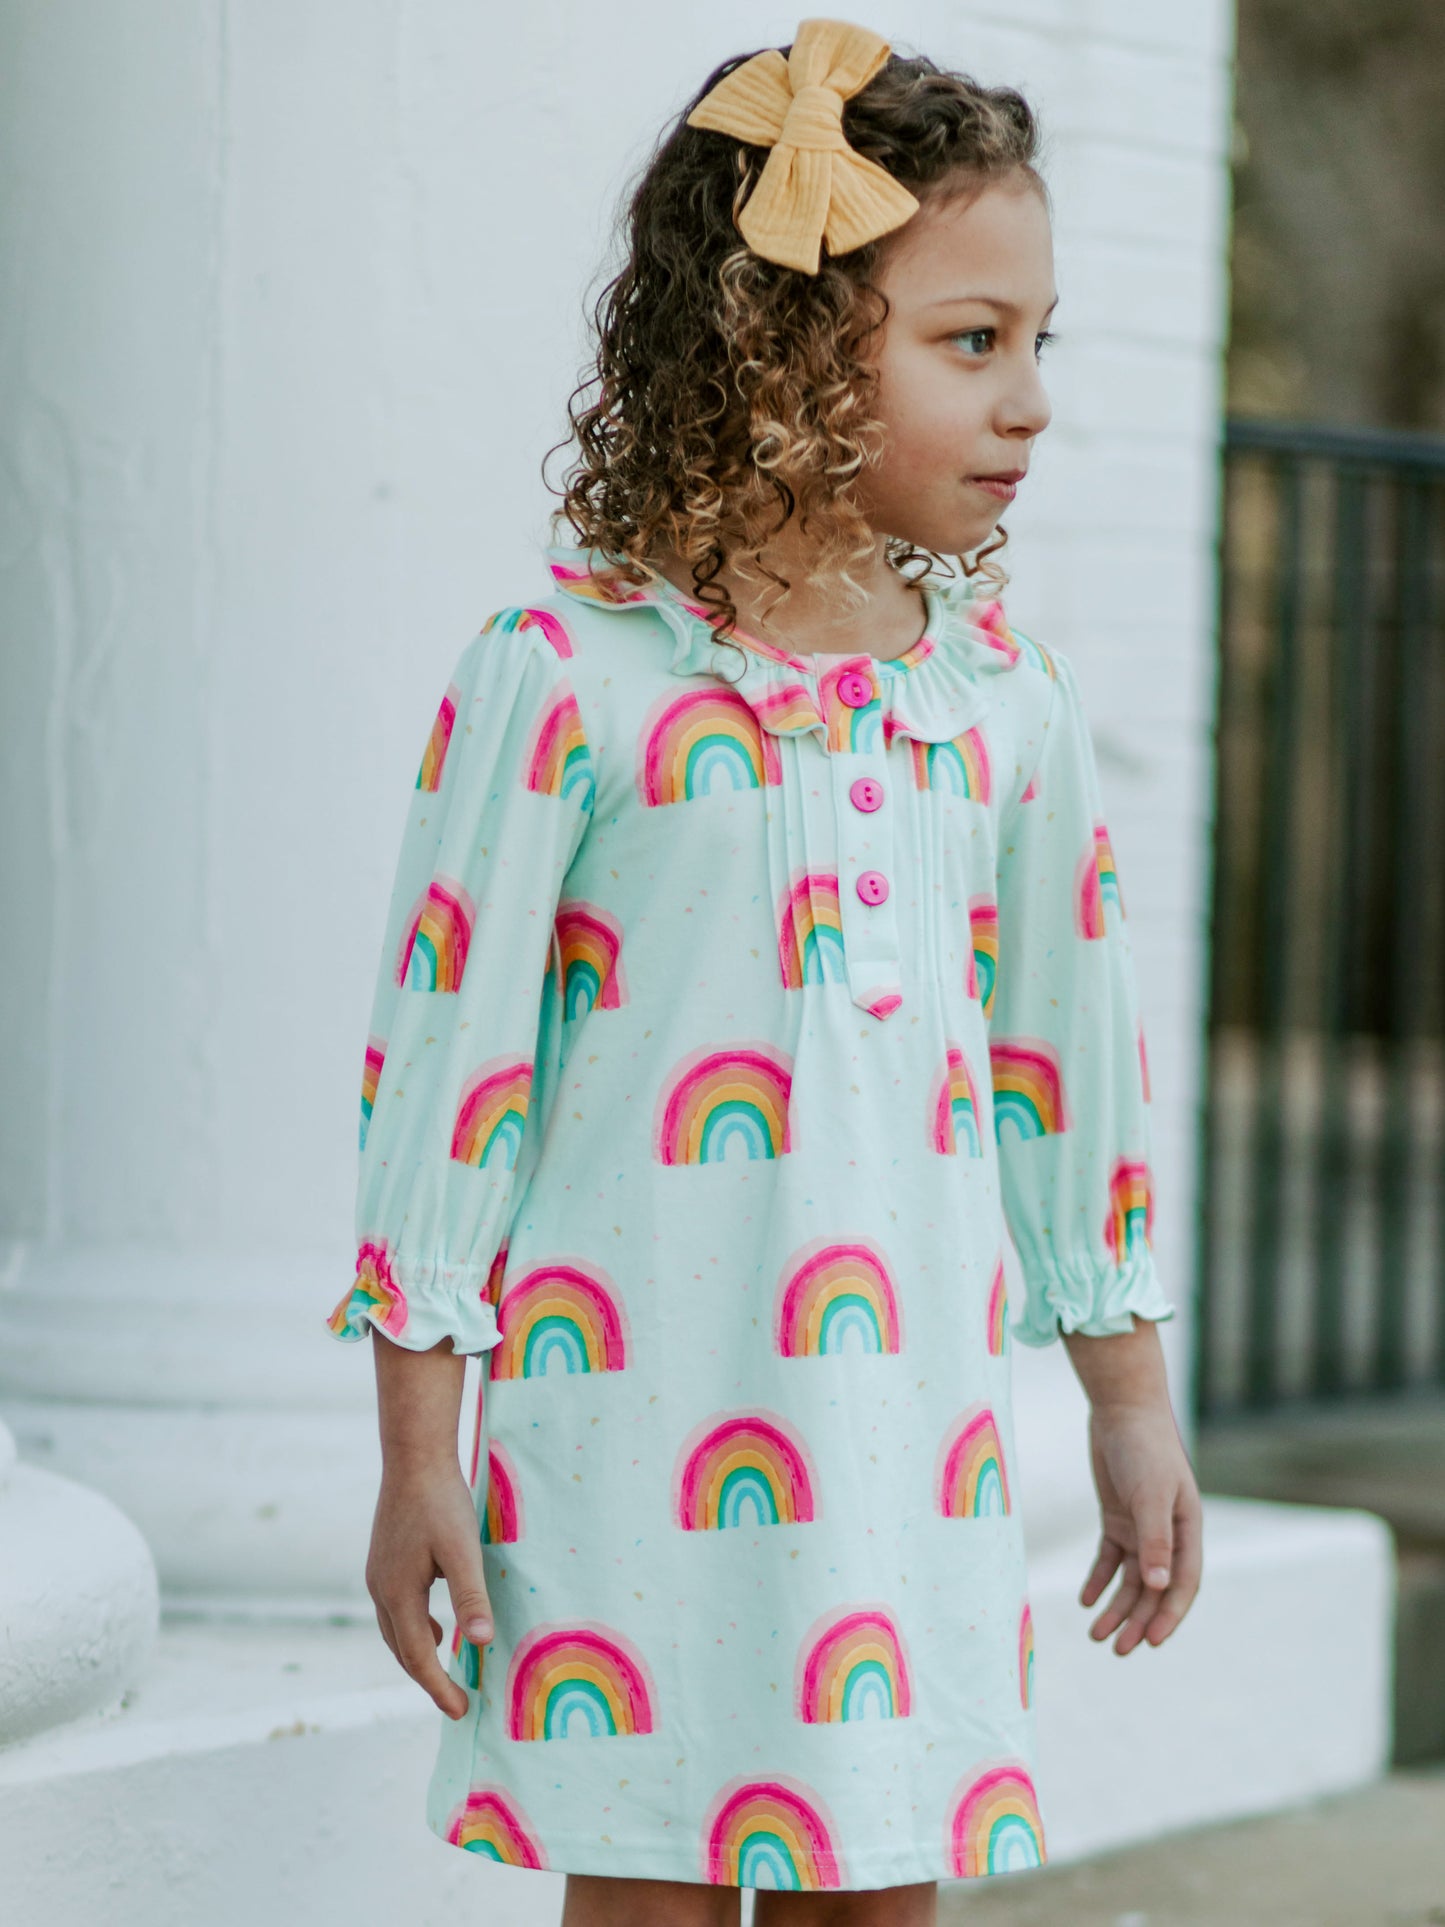 Ruffled Play Dress - Candy Rainbows